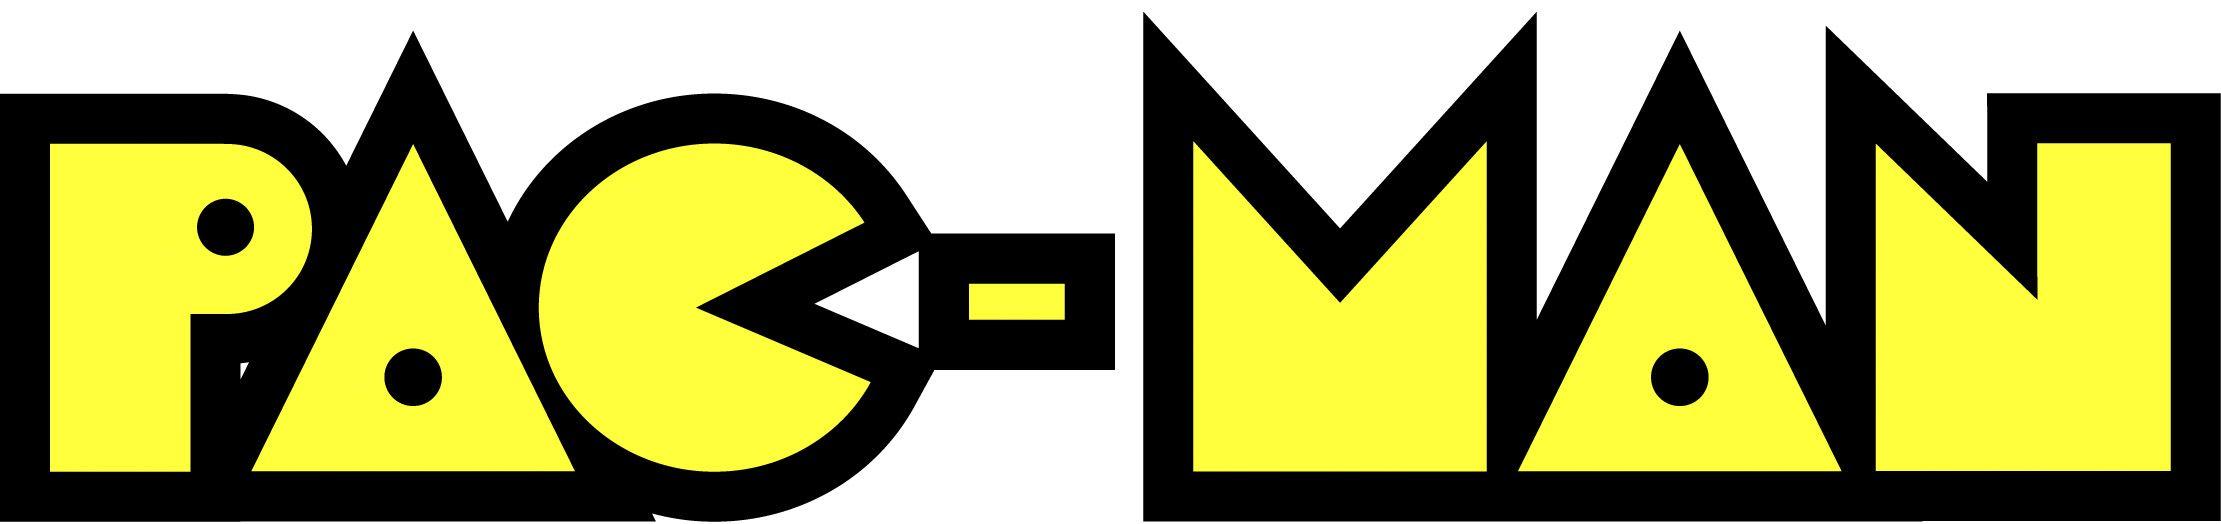 Pacman Logo - Microsoft Logo, Microsoft Symbol, Meaning, History and Evolution